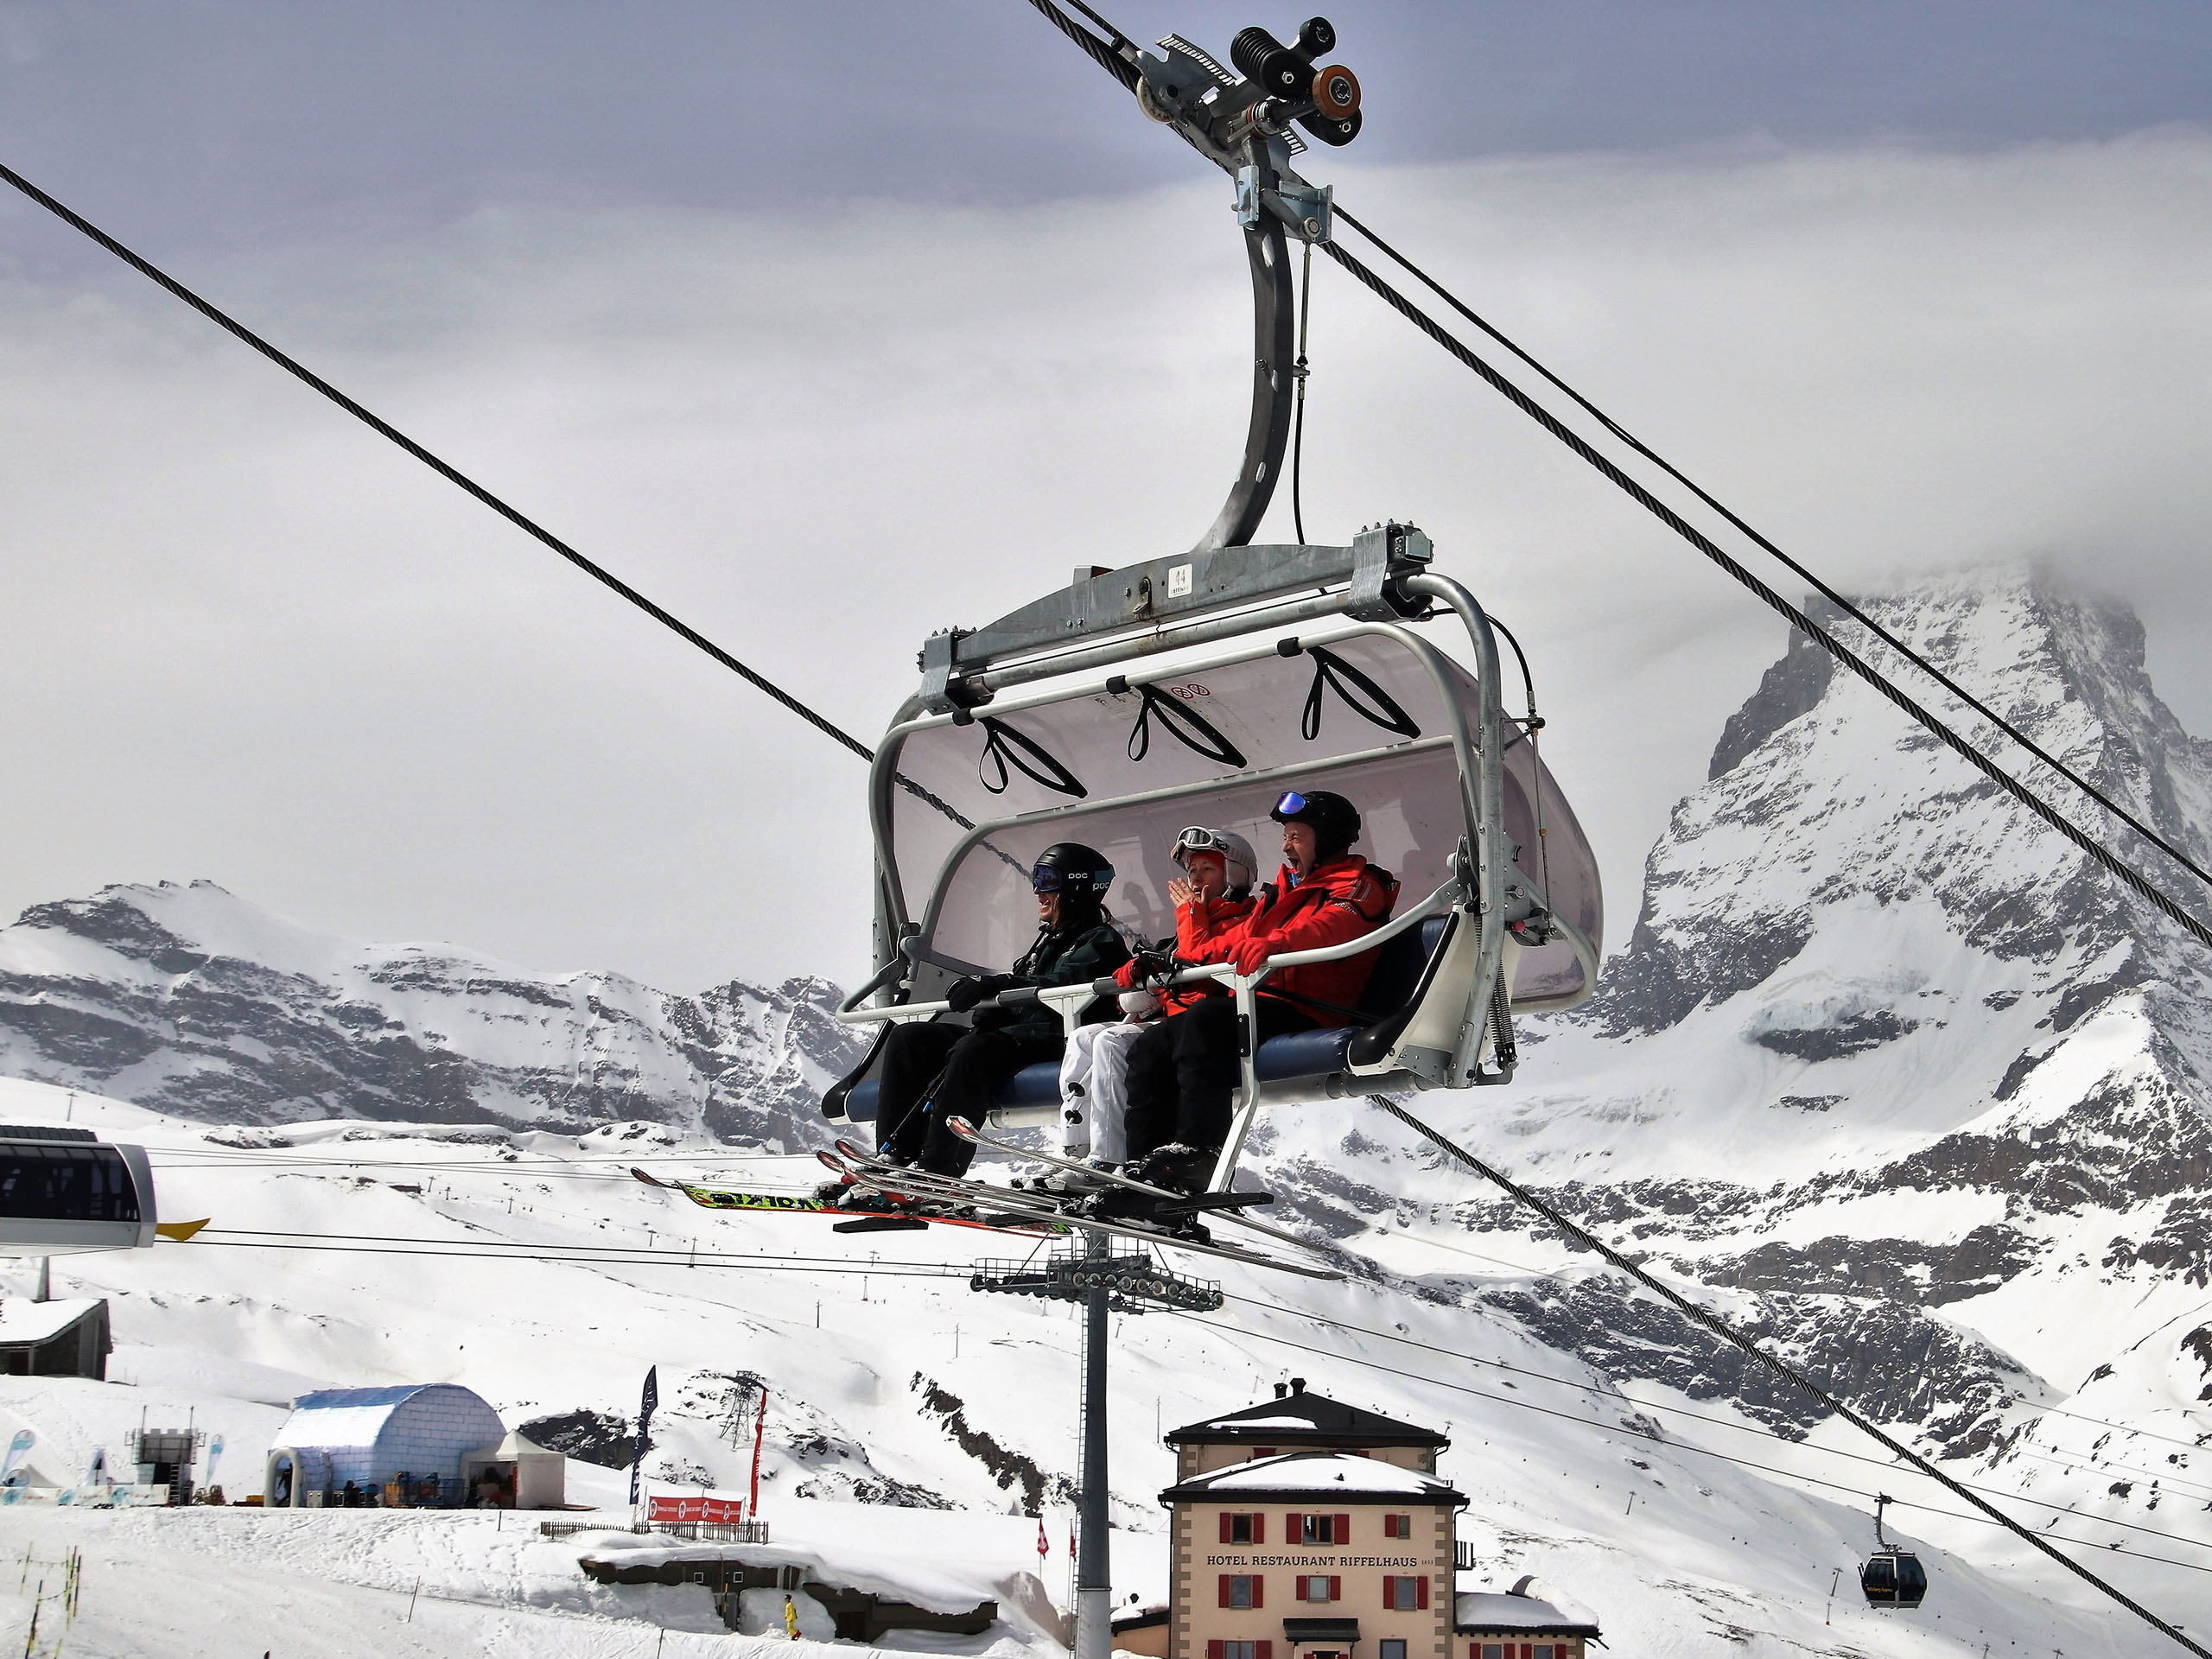 Zermatt is often considered the best skiing destination in the world